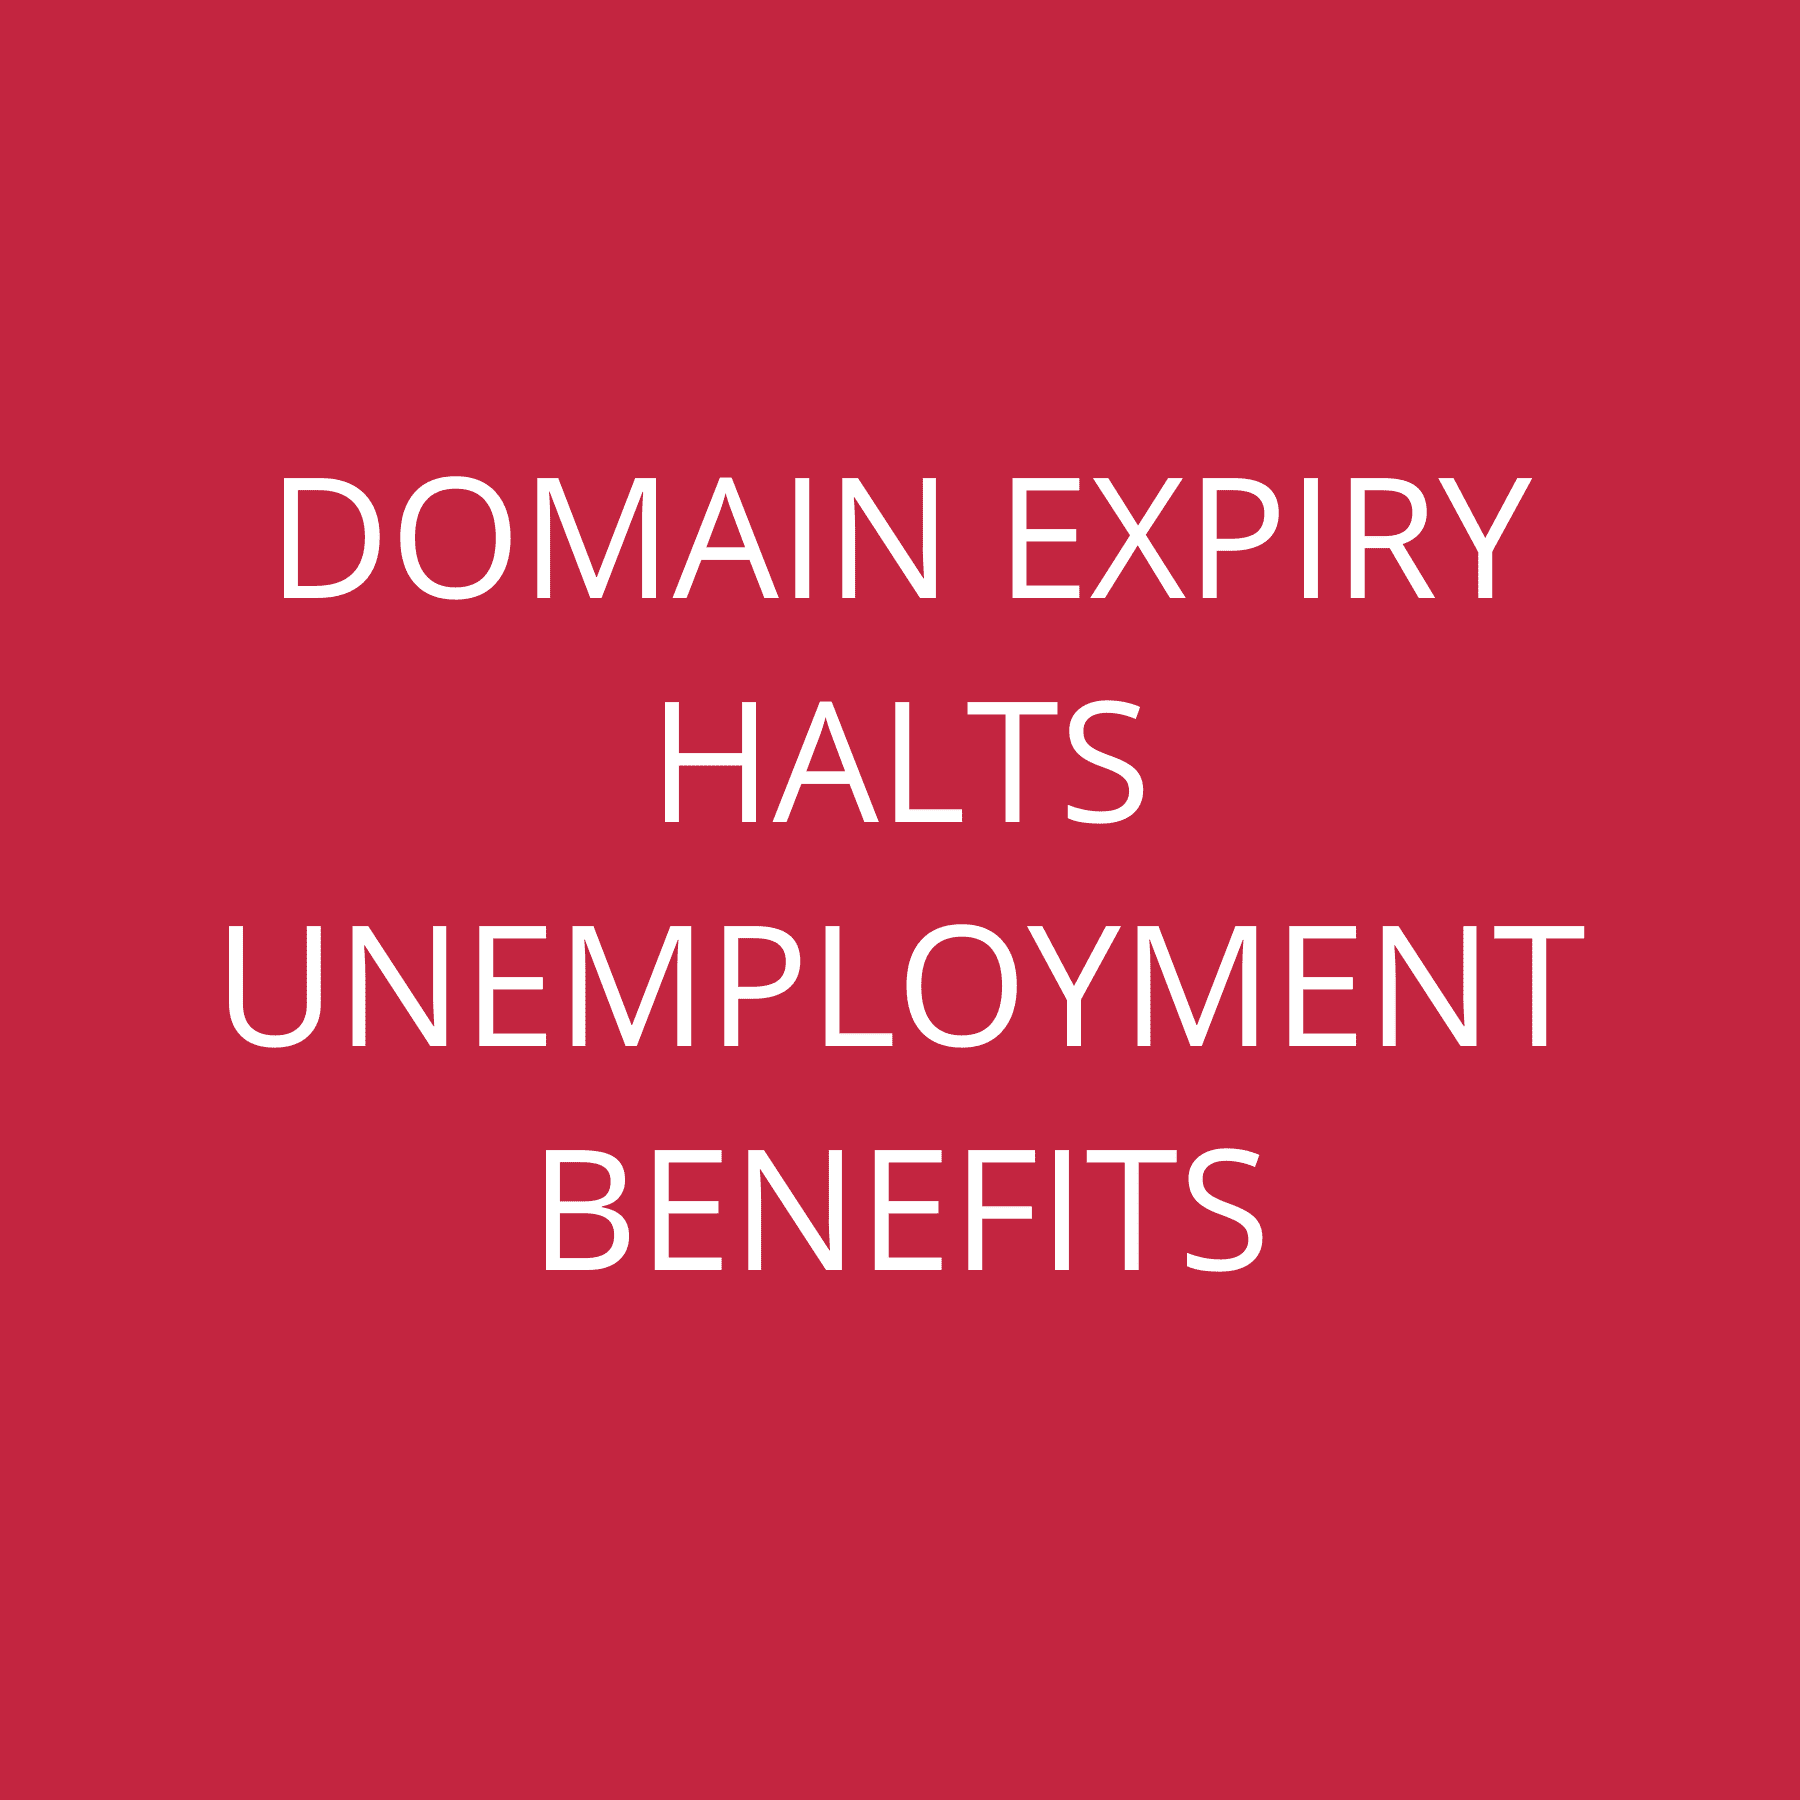 Domain Expiry halts Unemployment Benefits